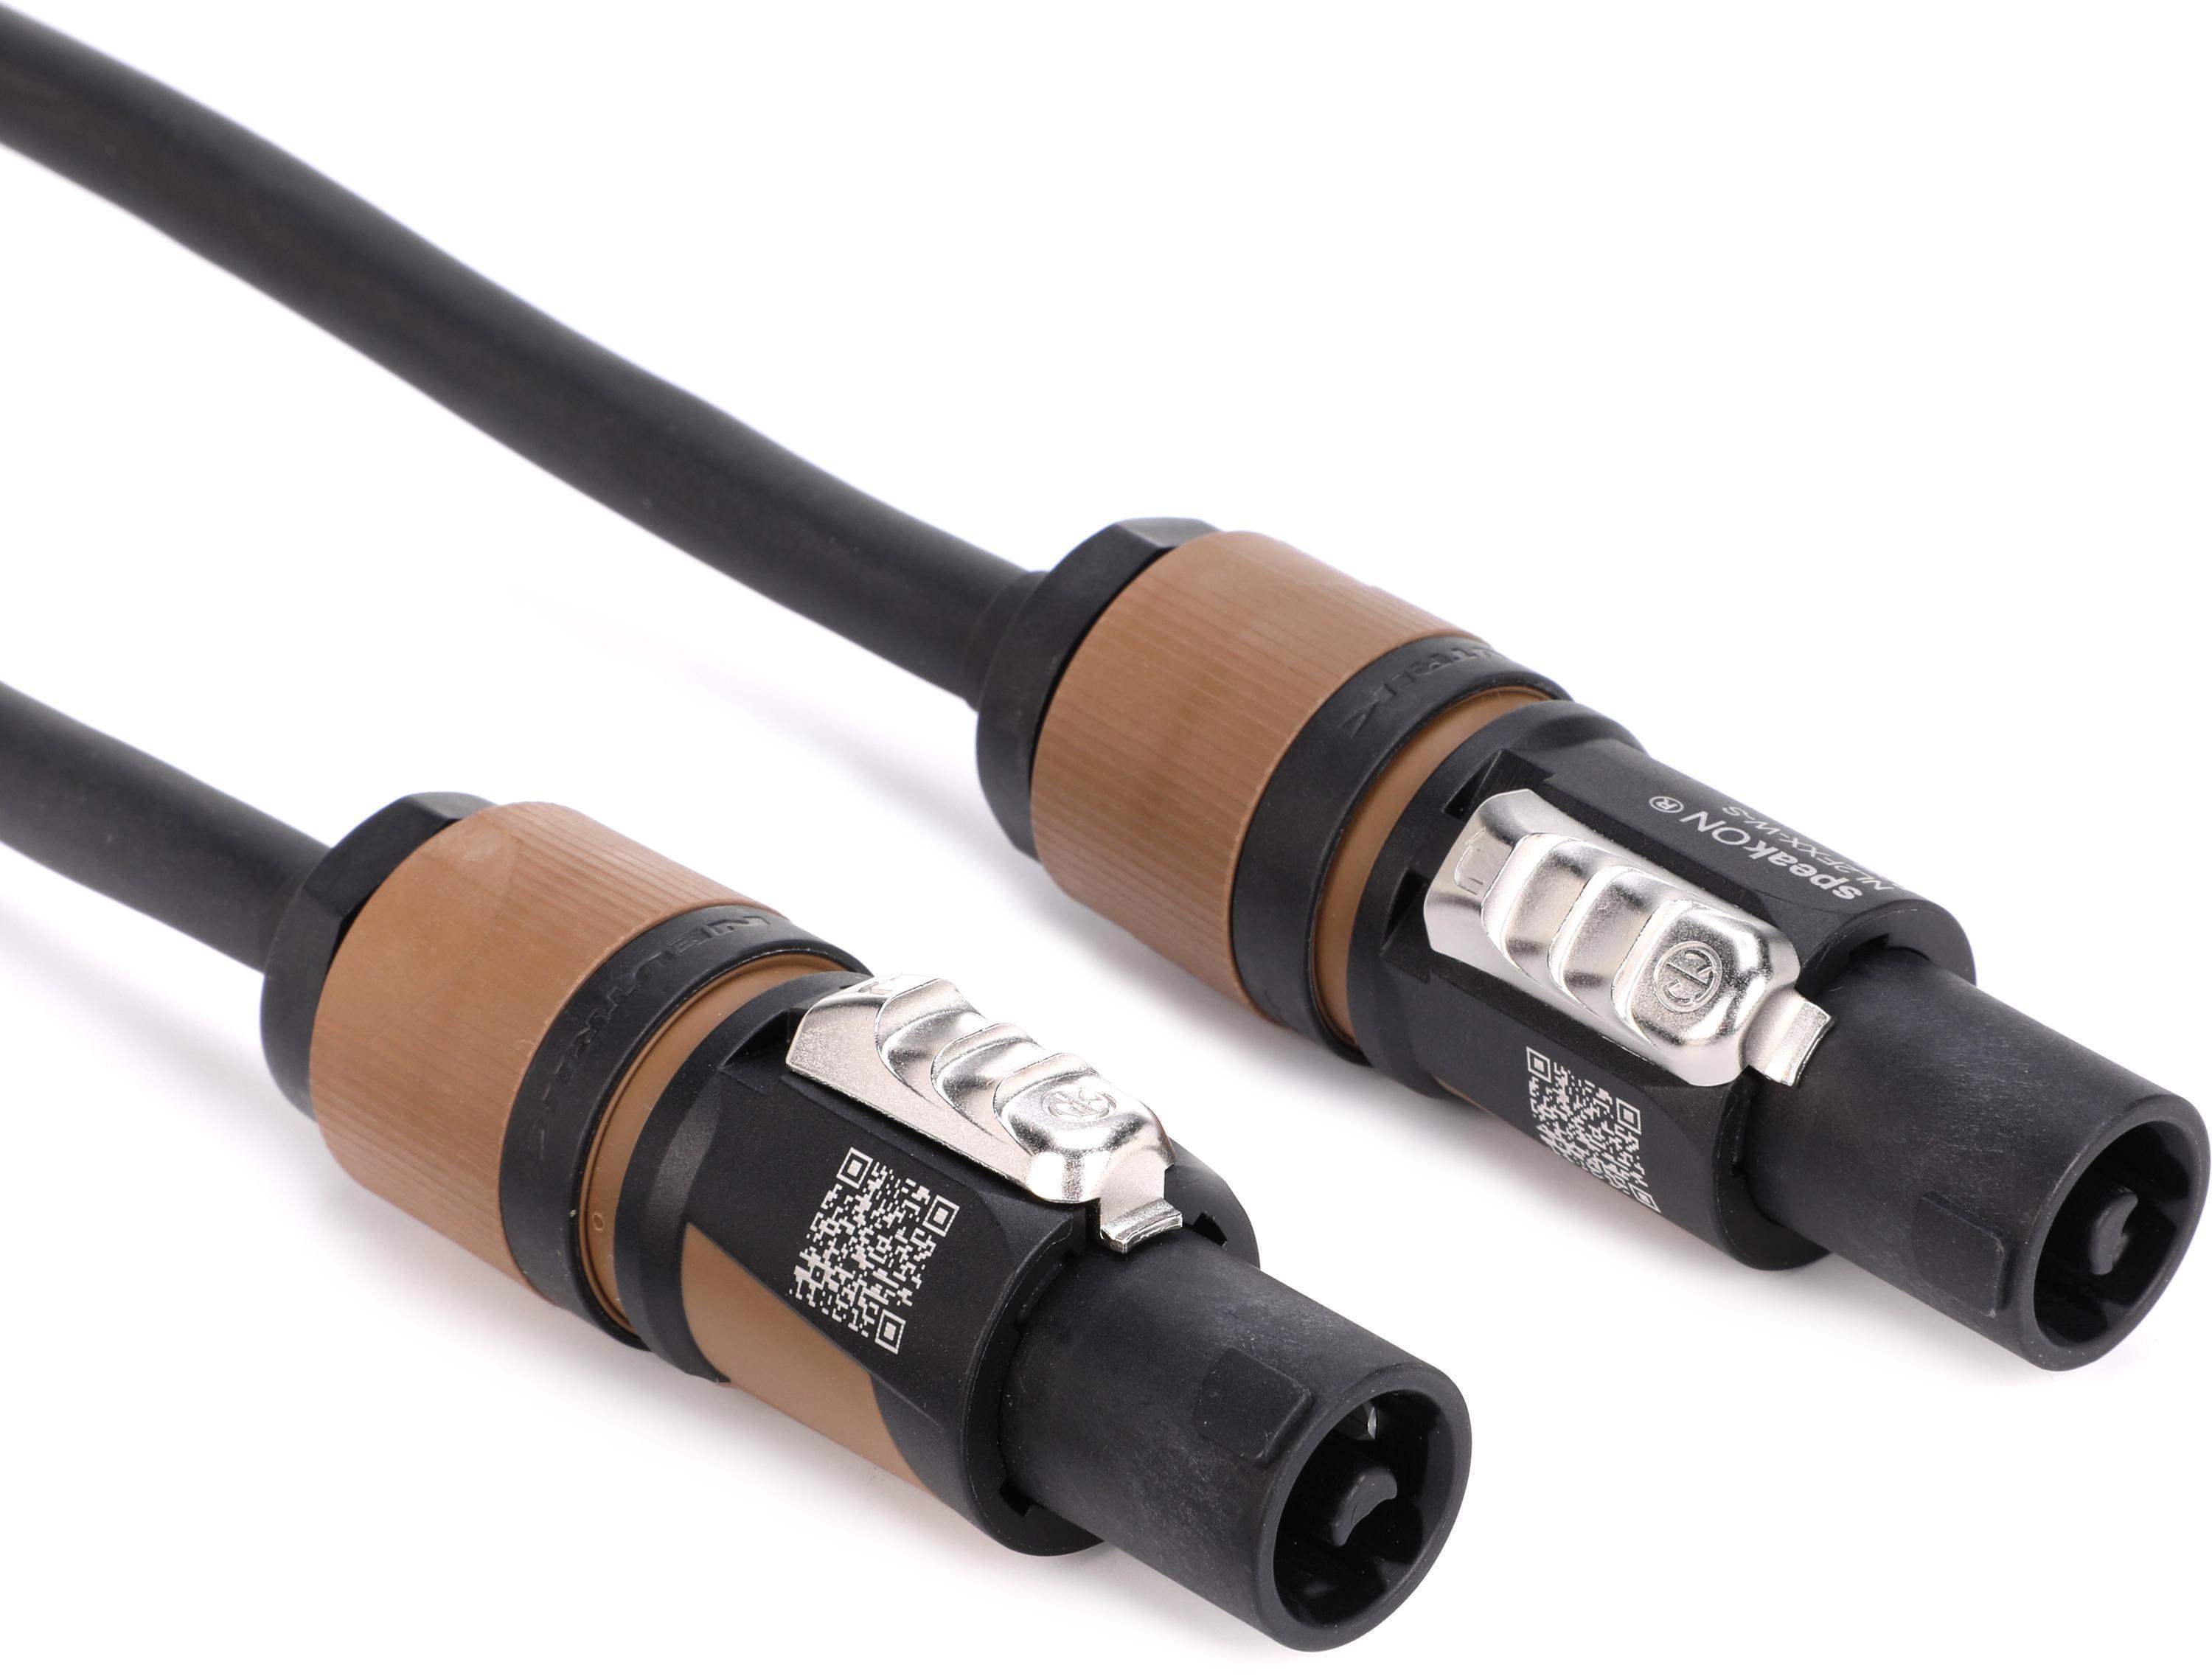 Bundled Item: Pro Co S12NN Speaker Cable - speakON to speakON - 25 foot